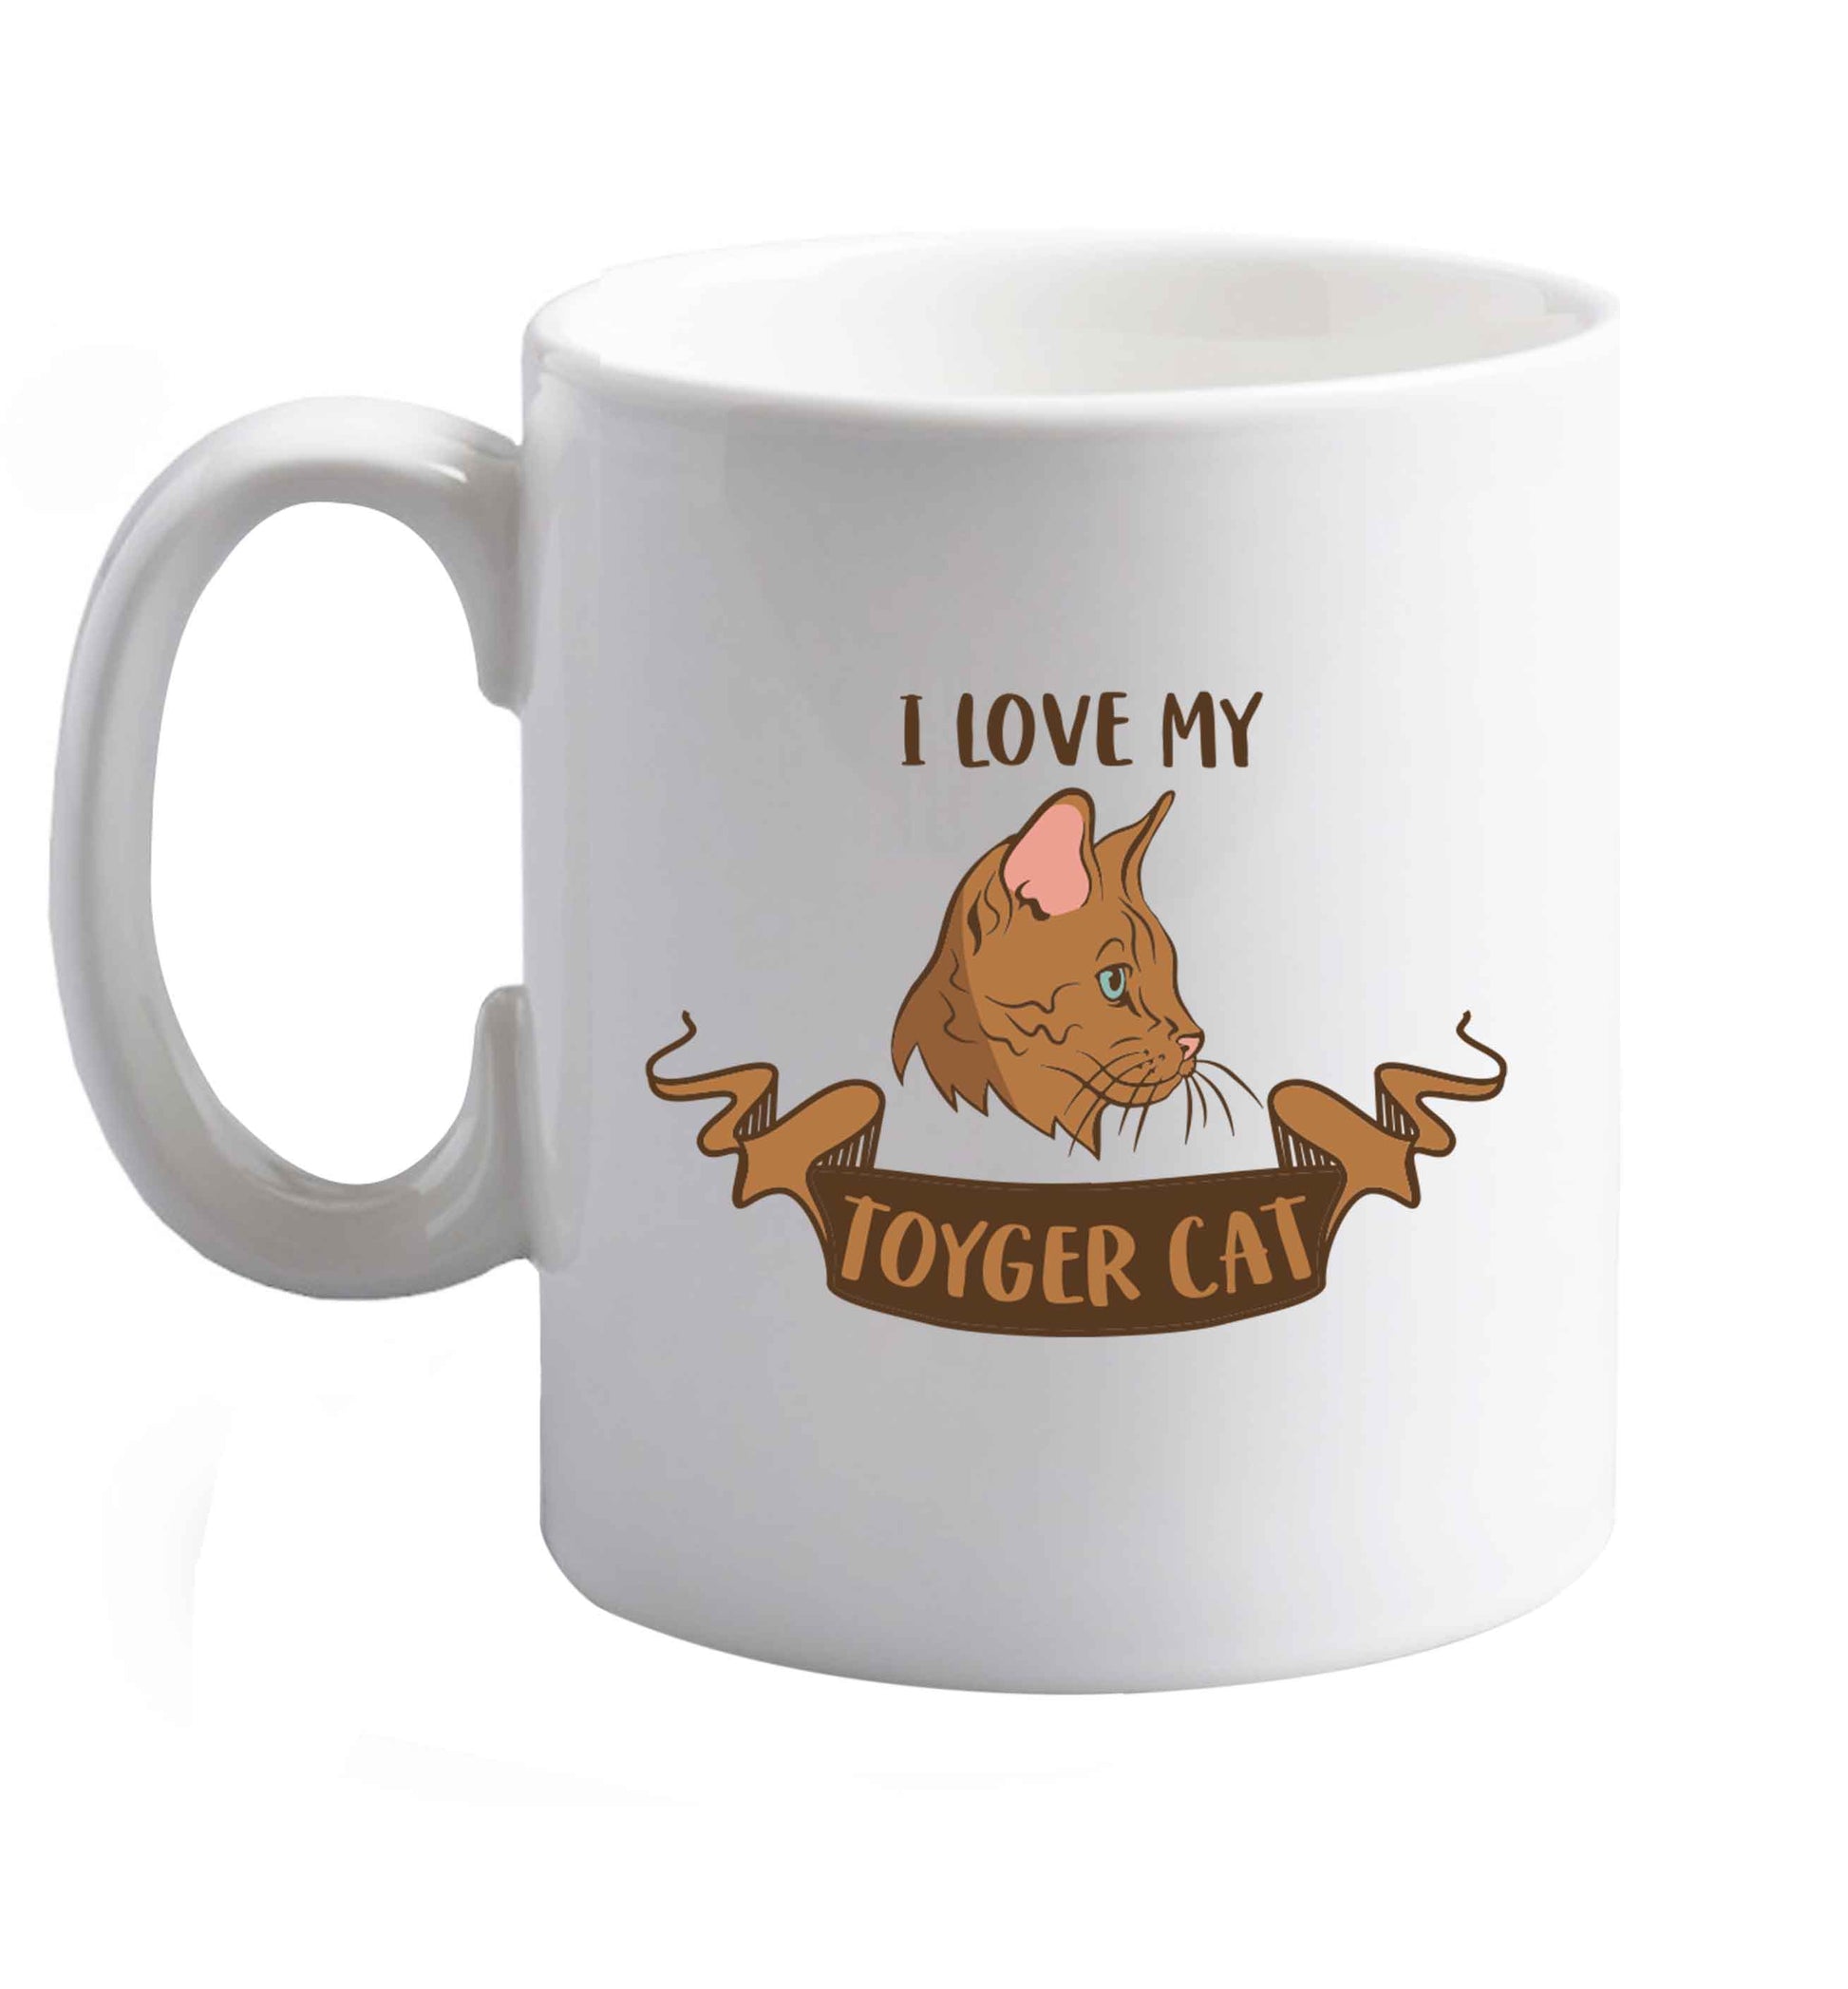 10 oz I love my toyger cat ceramic mug right handed